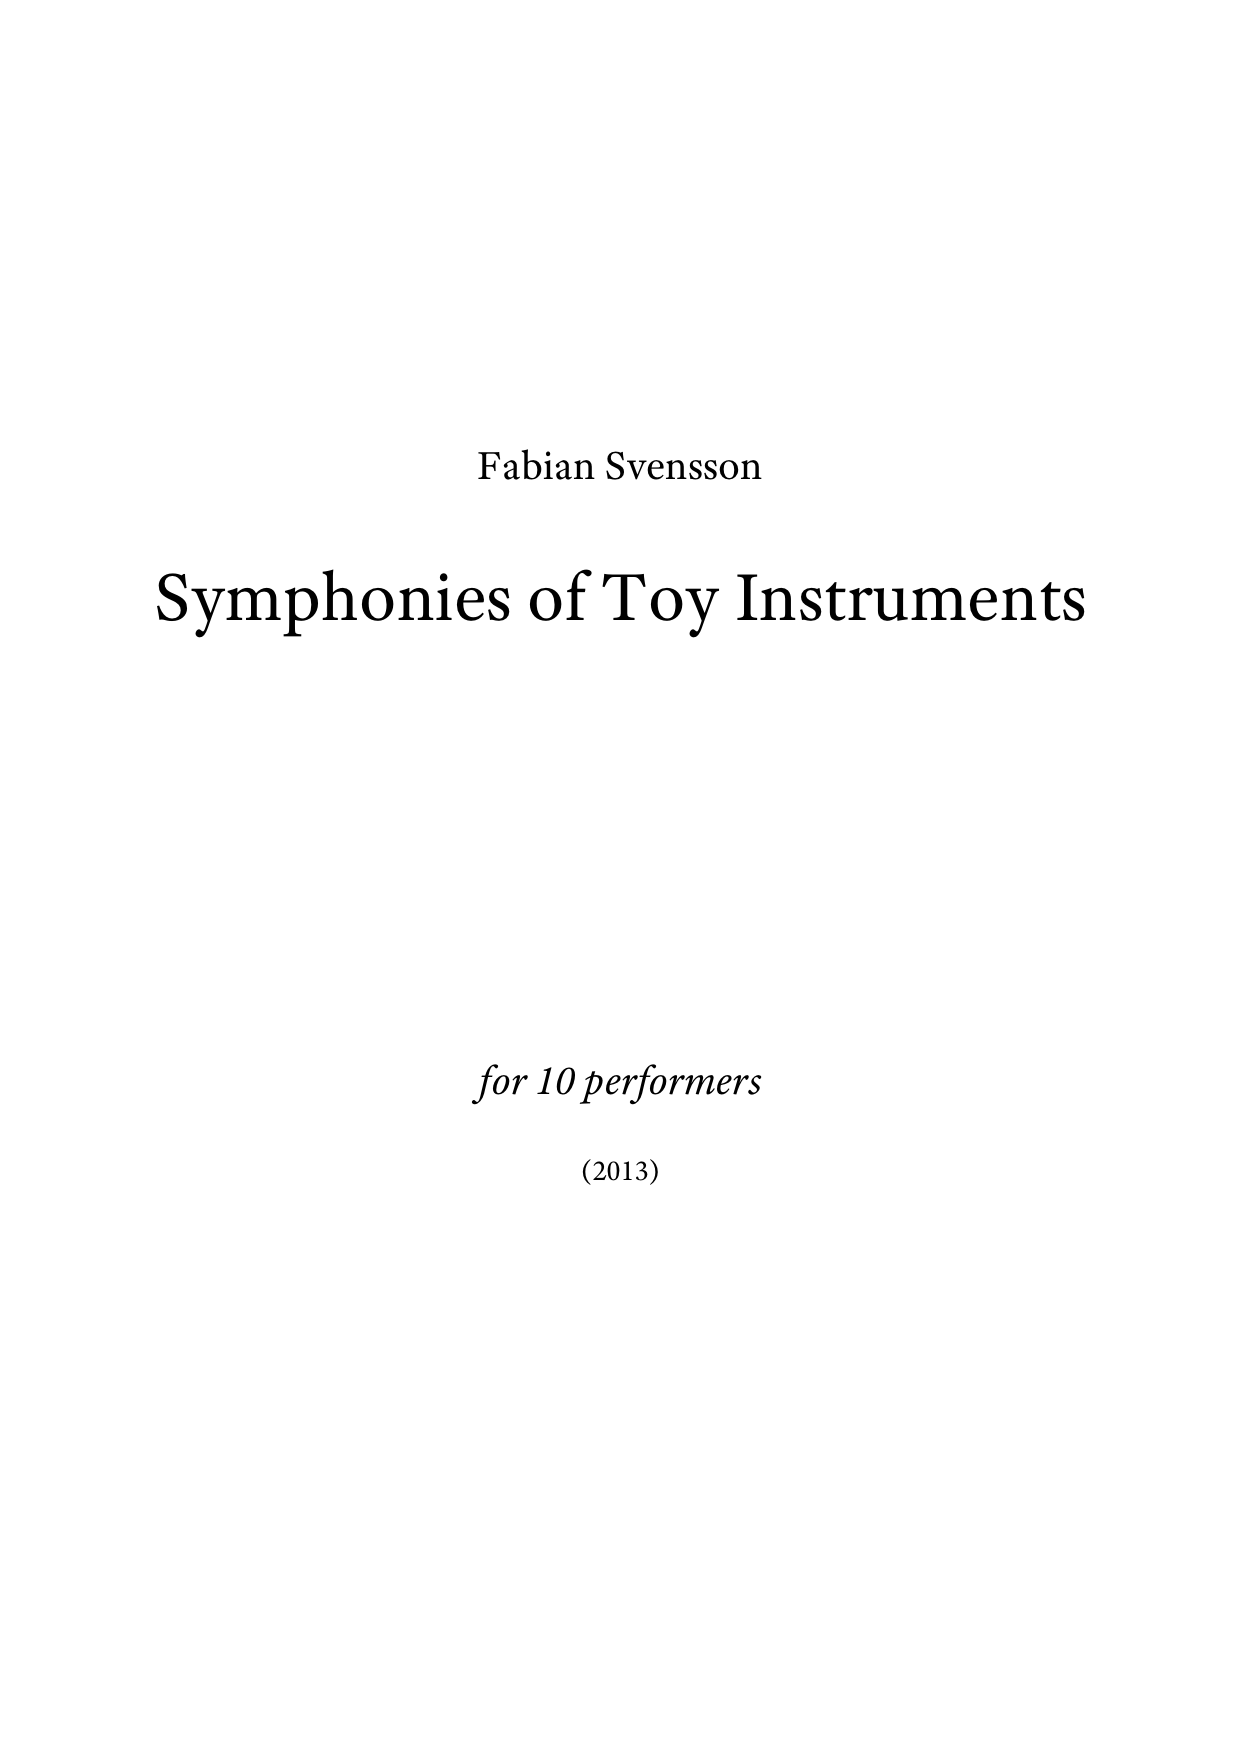 Symphonies of Toy Instruments A4 z 2 1 173